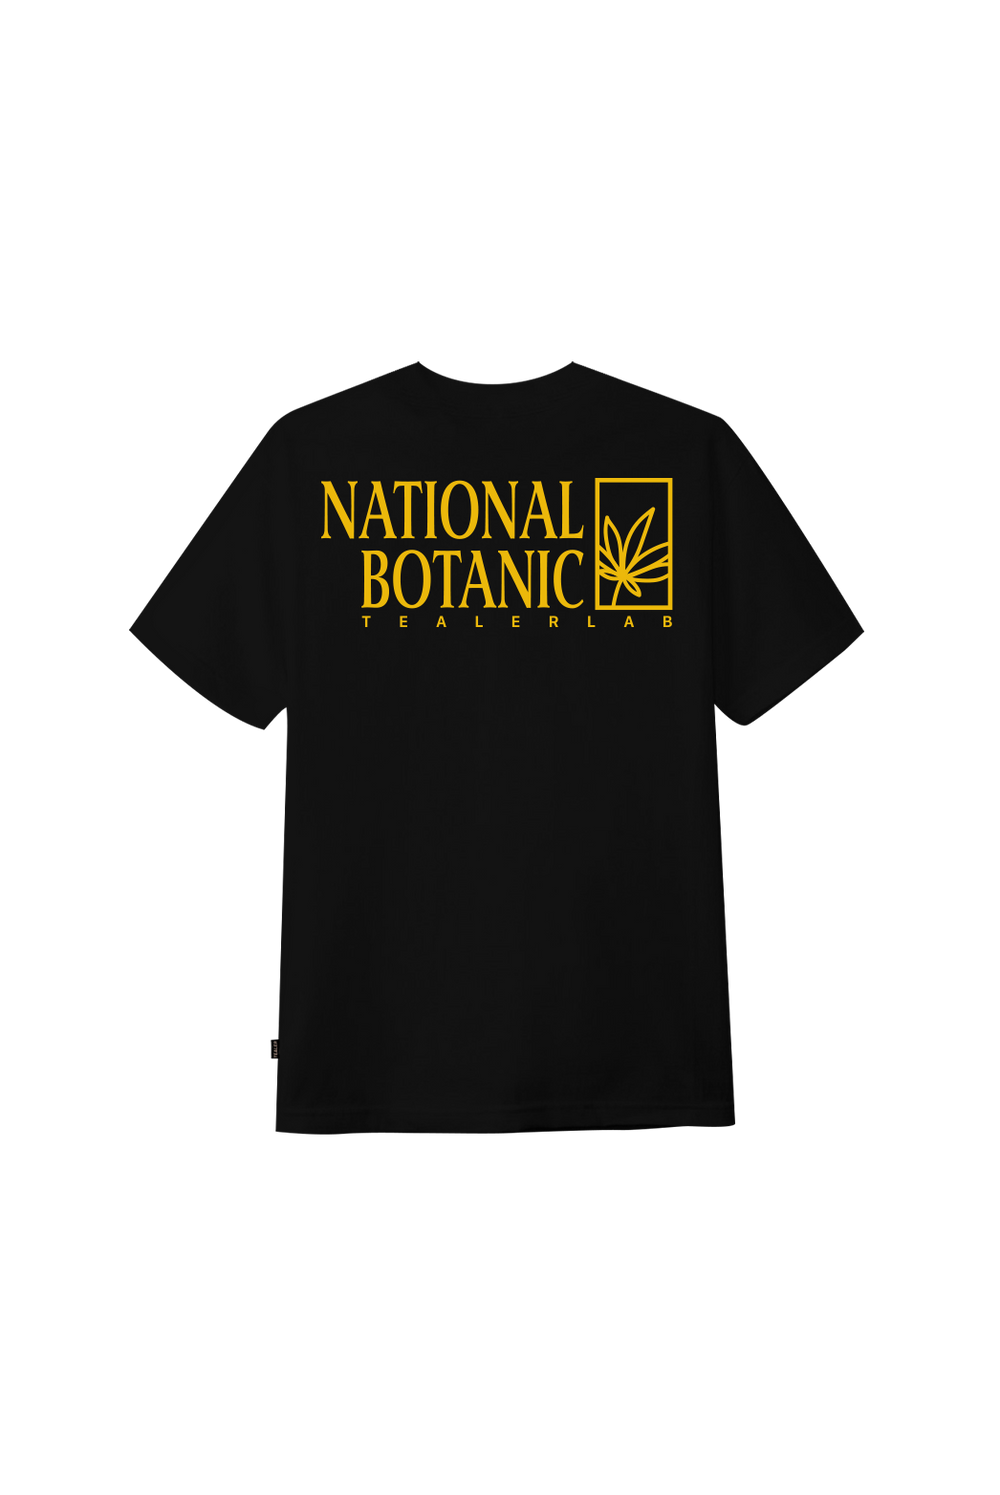 National Botanic Tealerlab, Tee Black